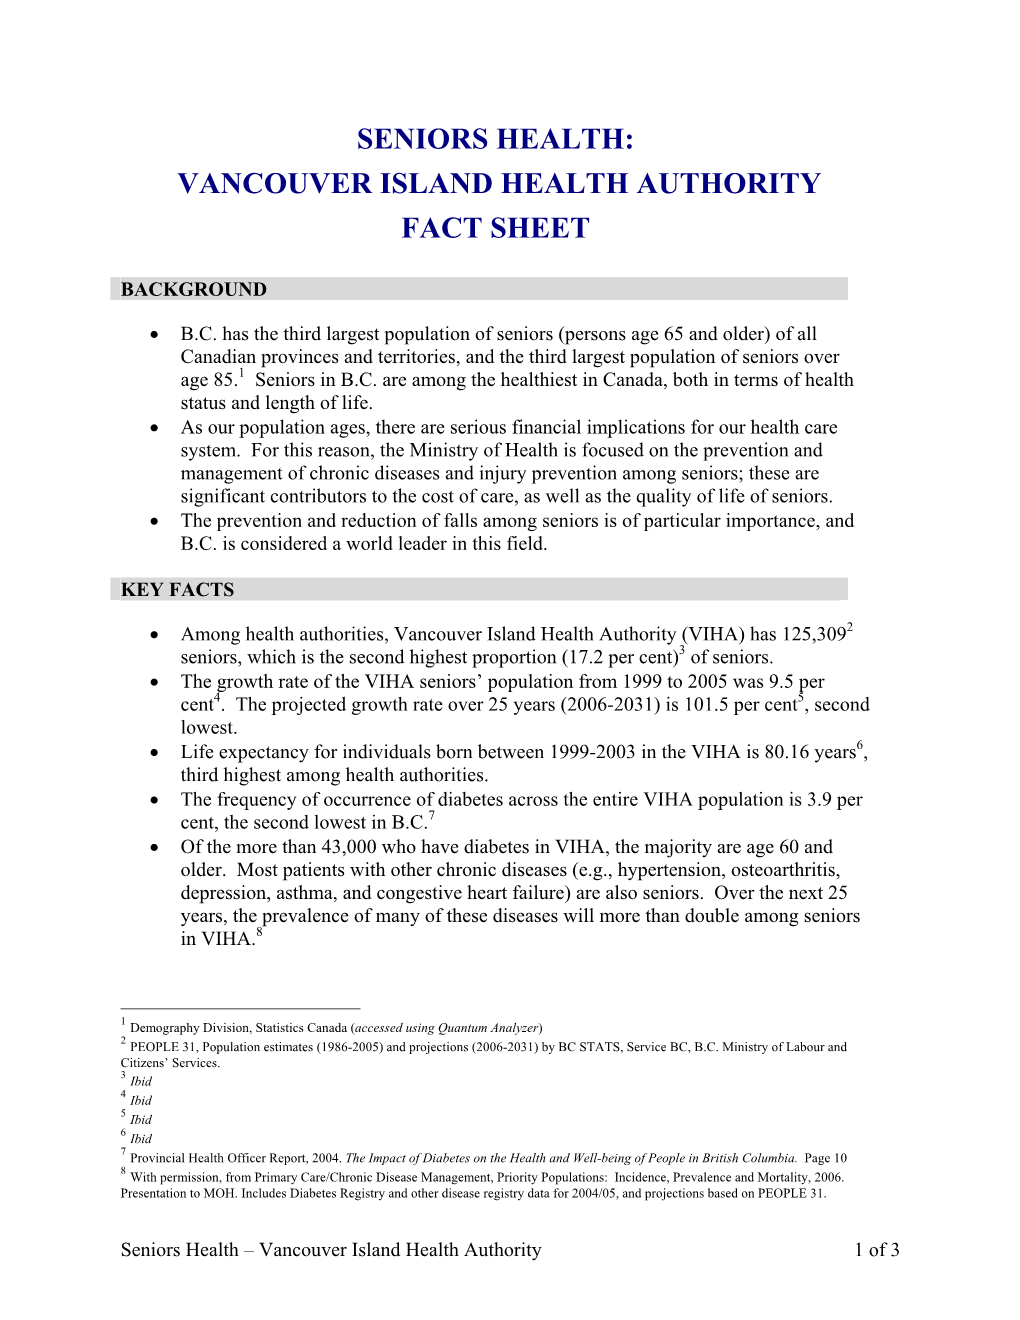 Seniors Health: Vancouver Island Health Authority Fact Sheet